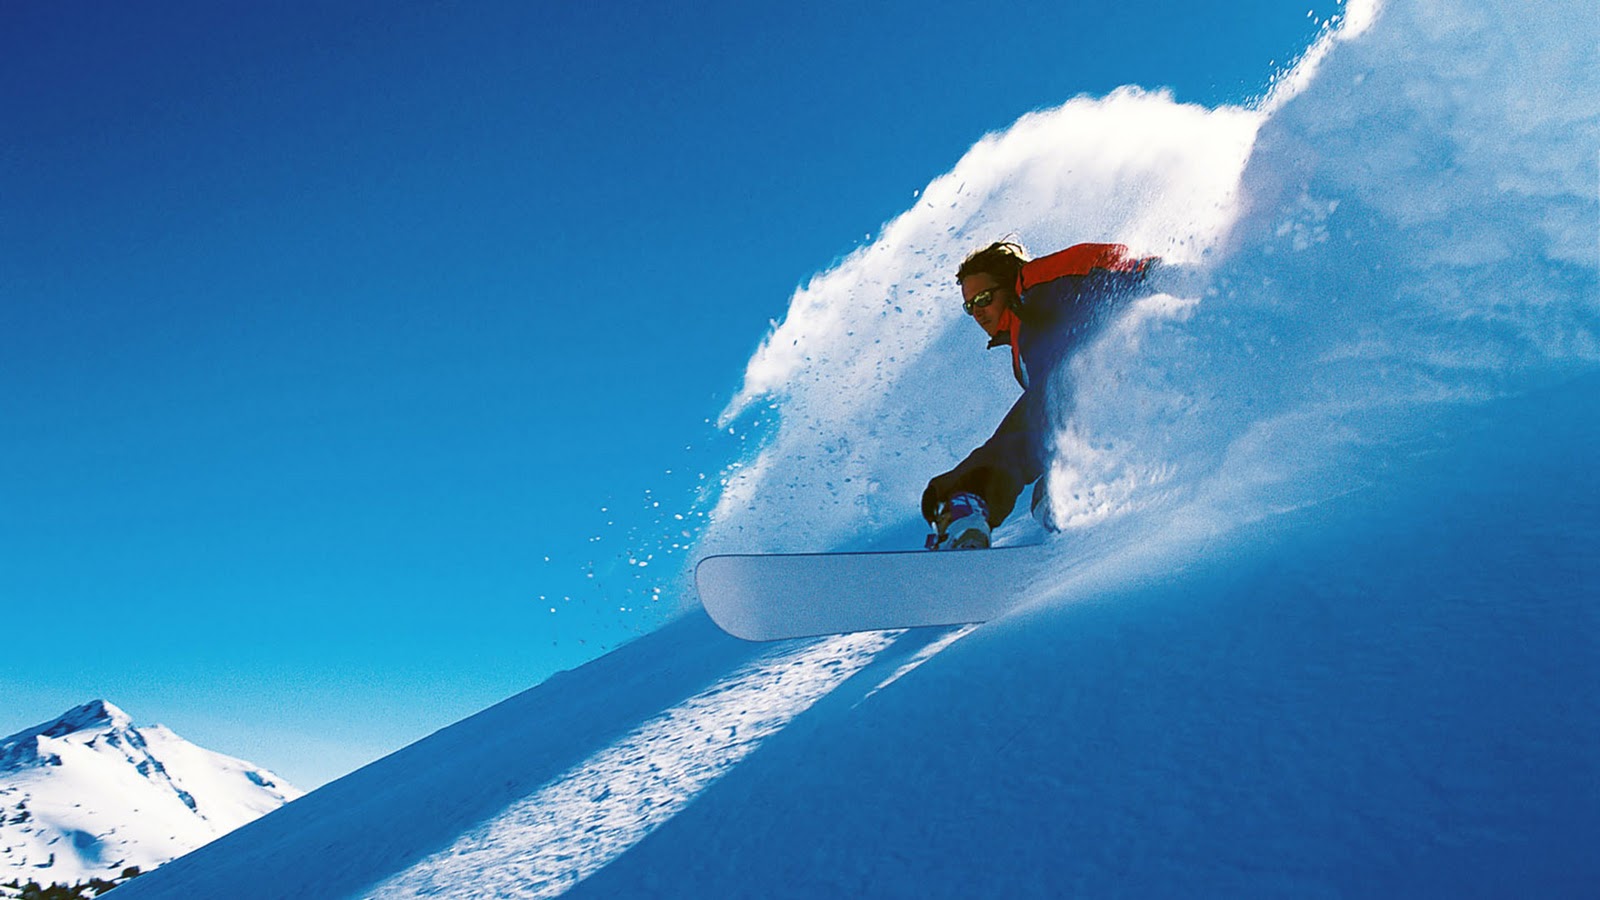 snowboard wallpaper,snowboard,snow,snowboarding,boardsport,recreation